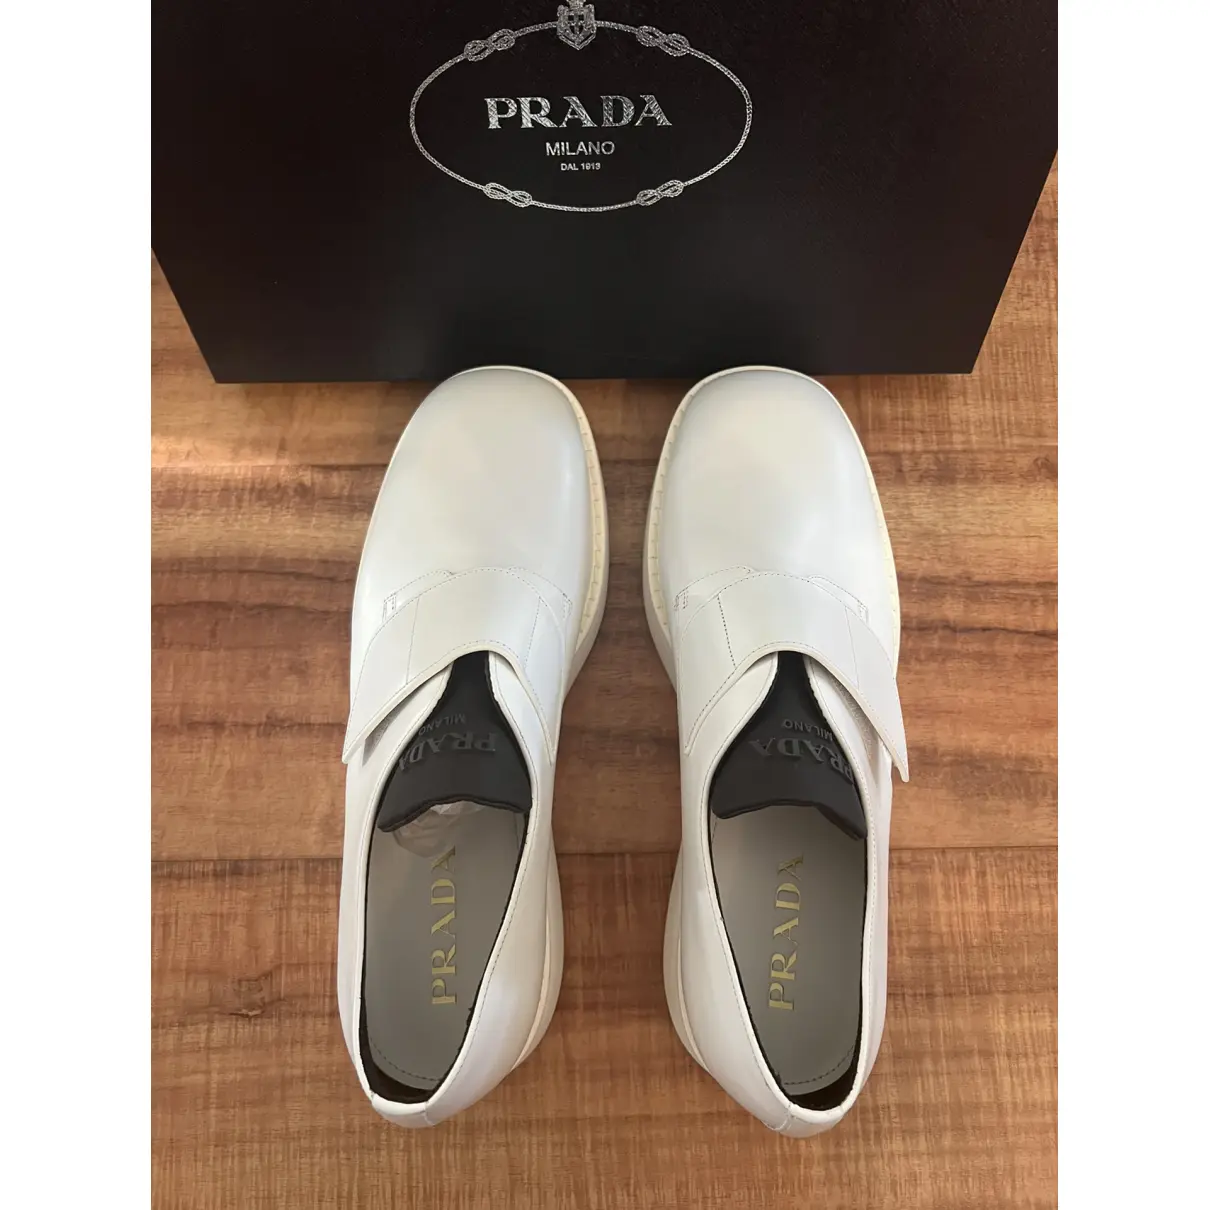 Patent leather flats Prada